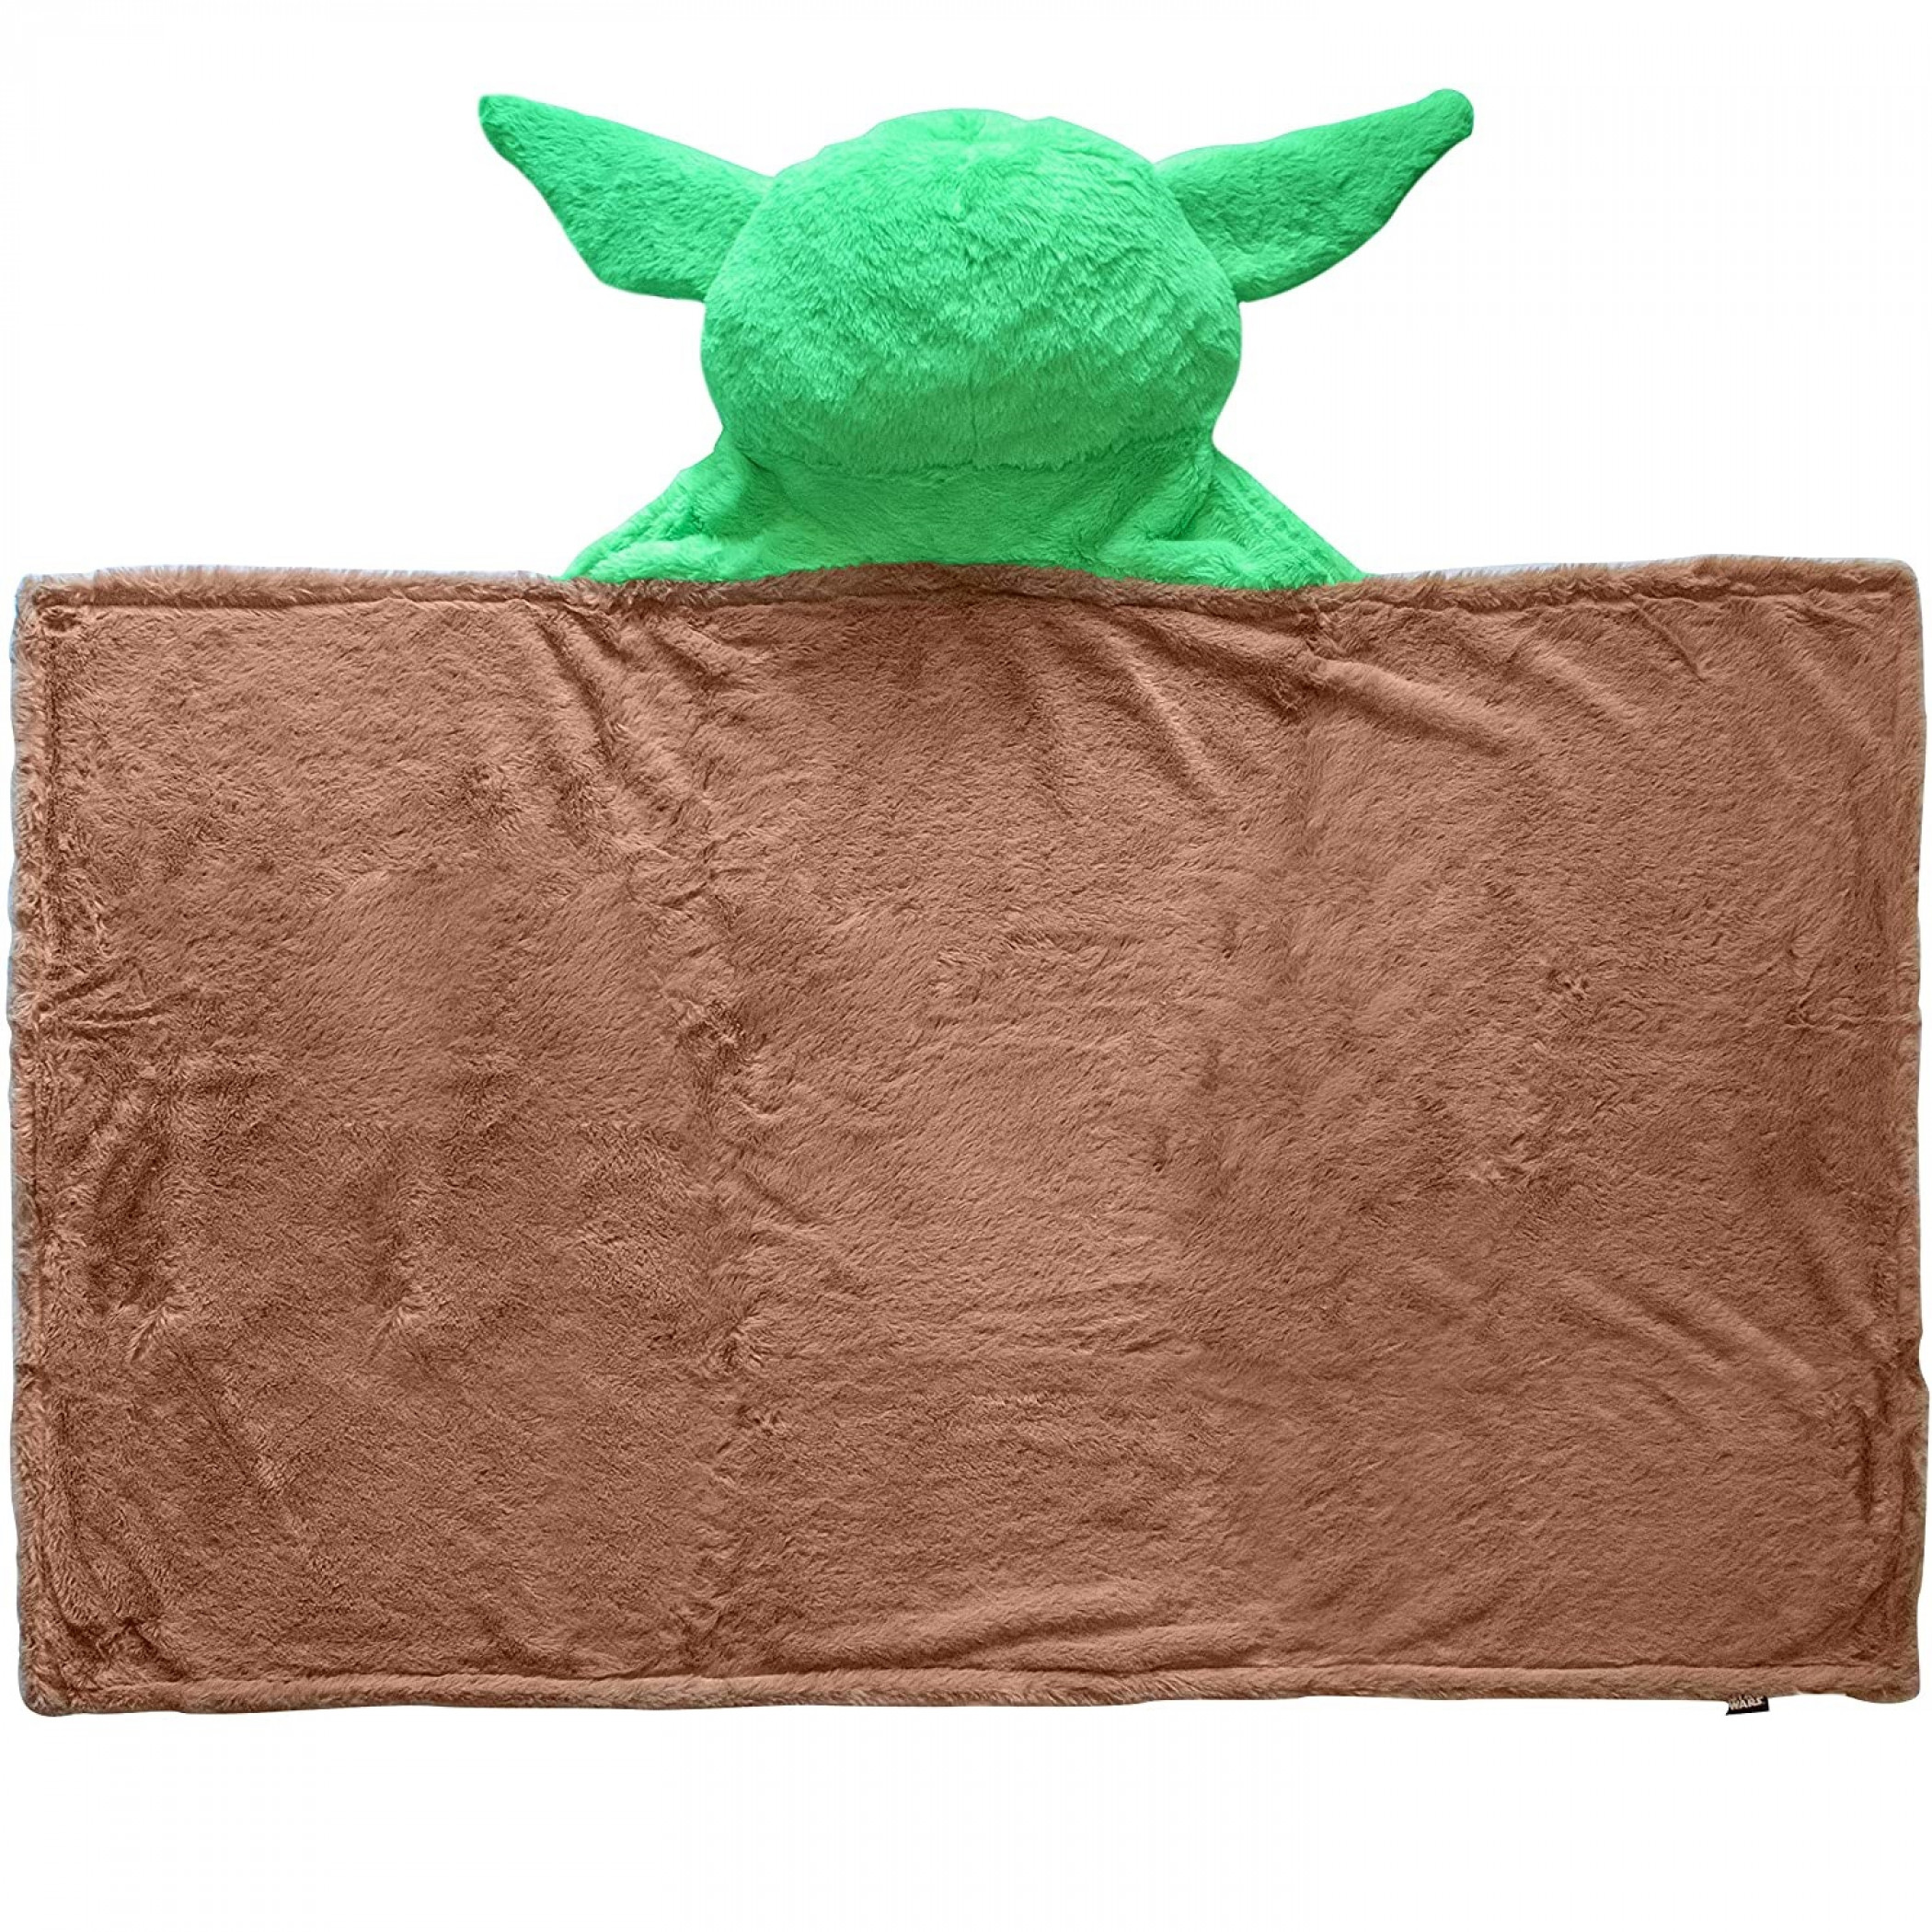 Star Wars The Mandalorian The Child Hooded Blanket